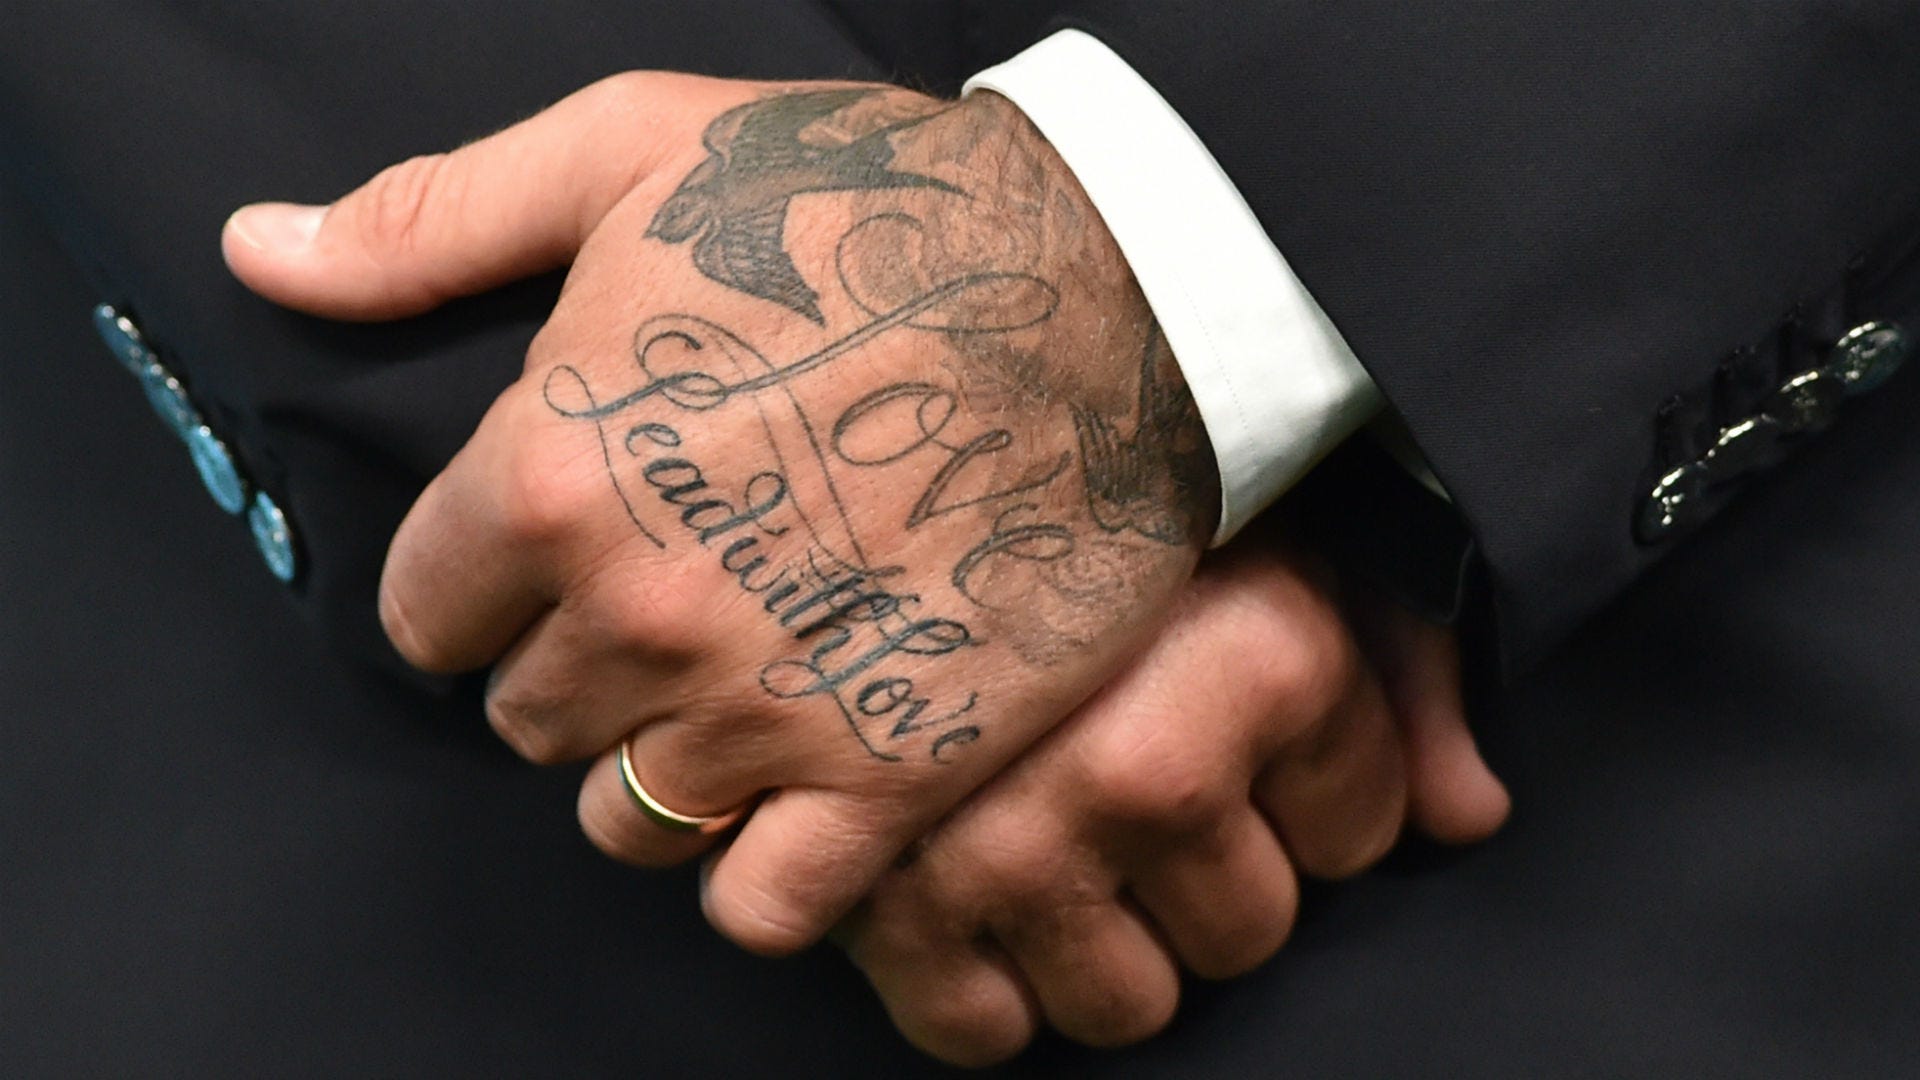 Nicola Peltz New Tattoo in Honor of Brooklyn Beckham